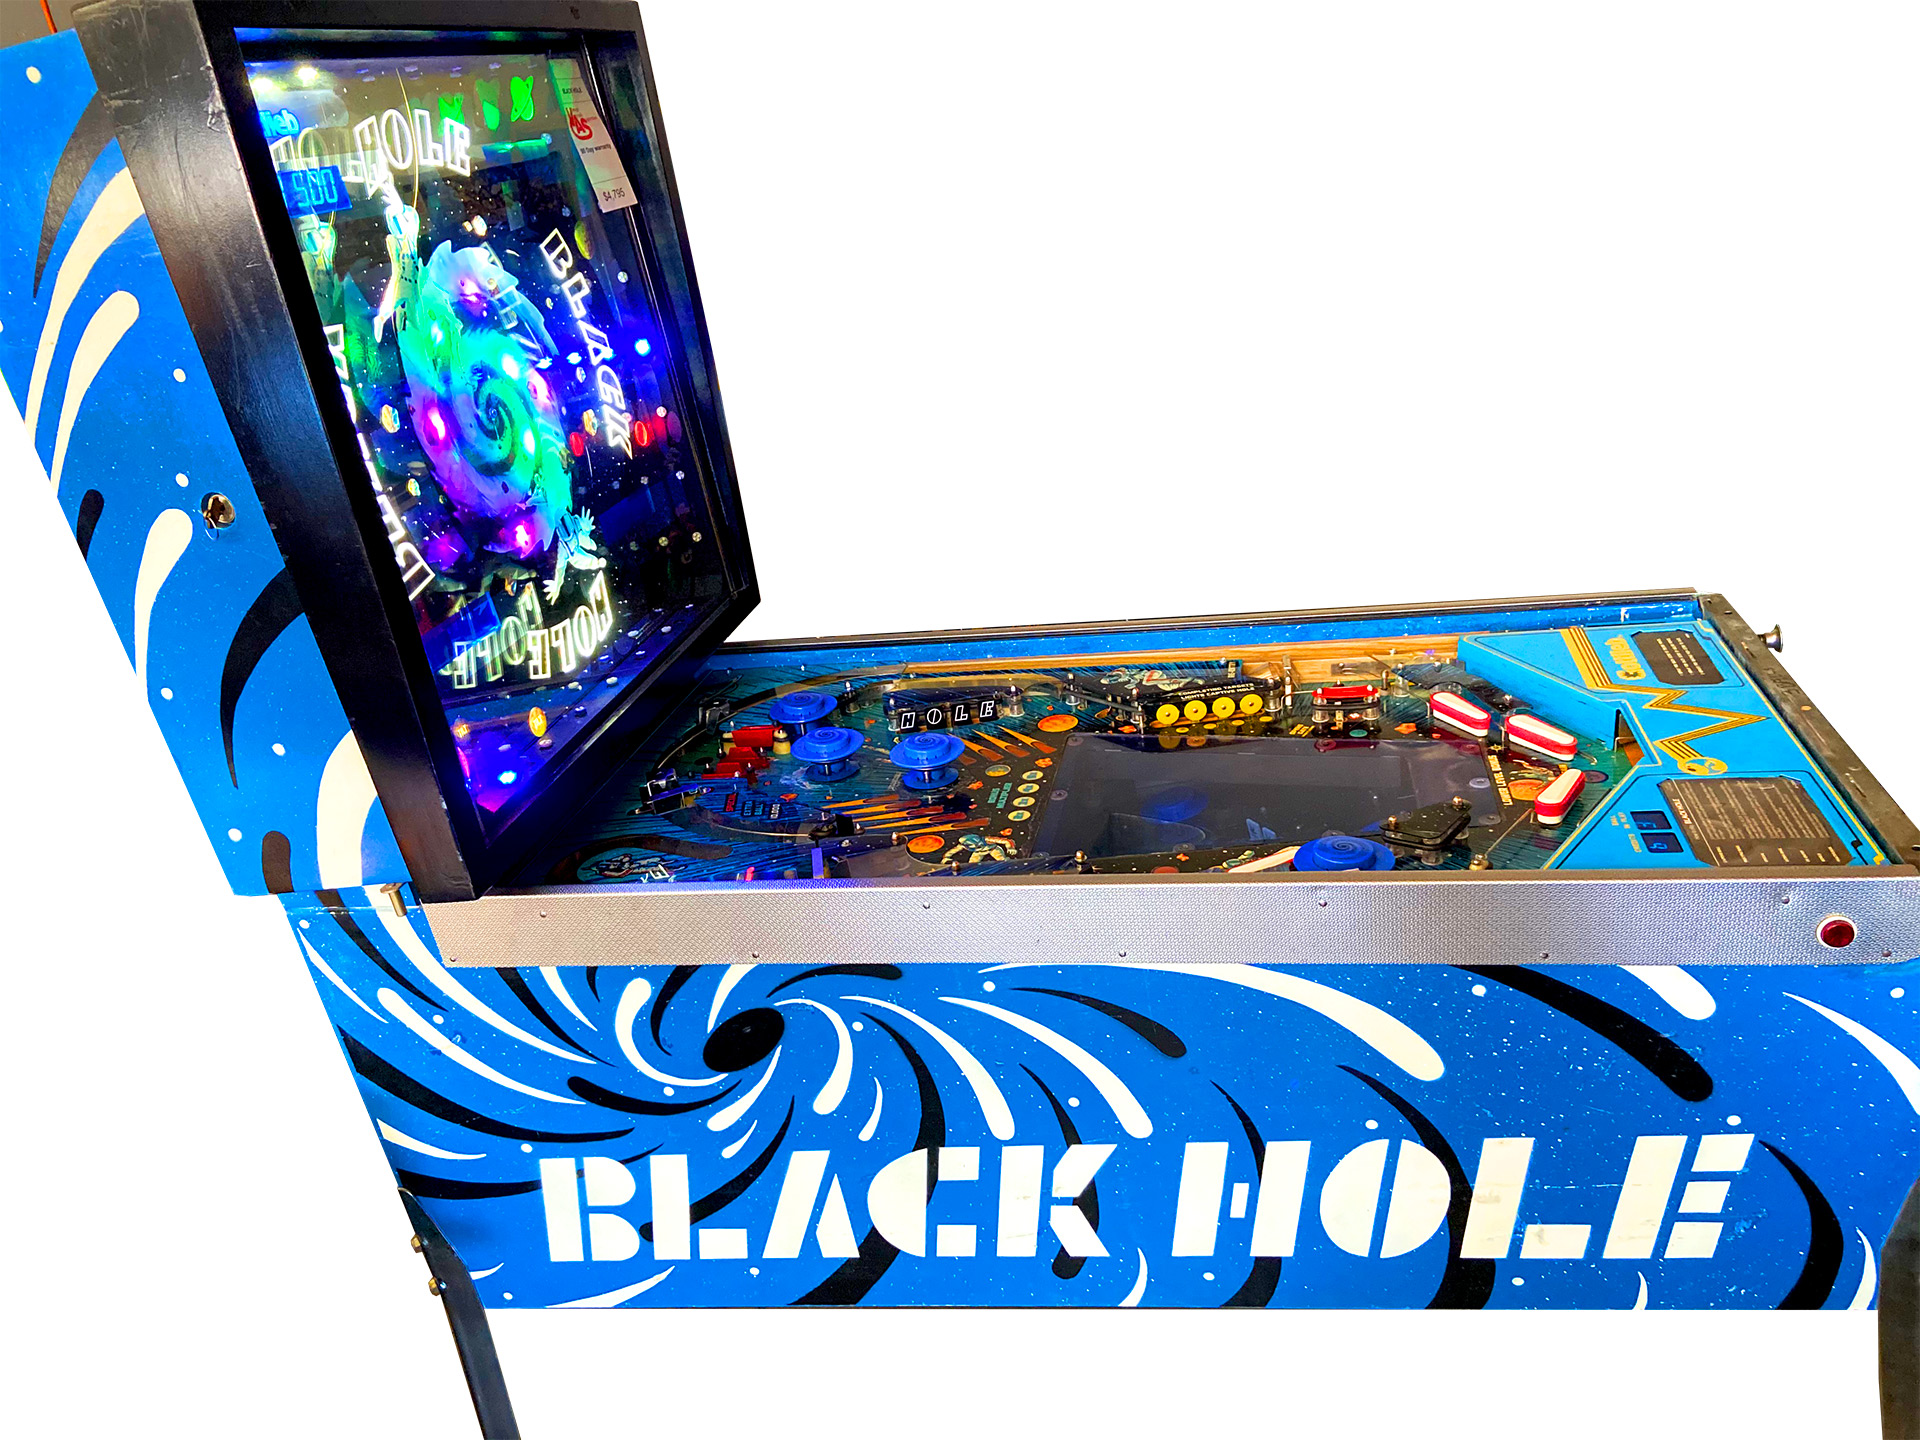 Legends Pinball, Full Size Arcade Machine, Home Arcade, Classic Retro Video  Games, 22 Built in Licensed Genre-Defining Pinball Games, Black Hole